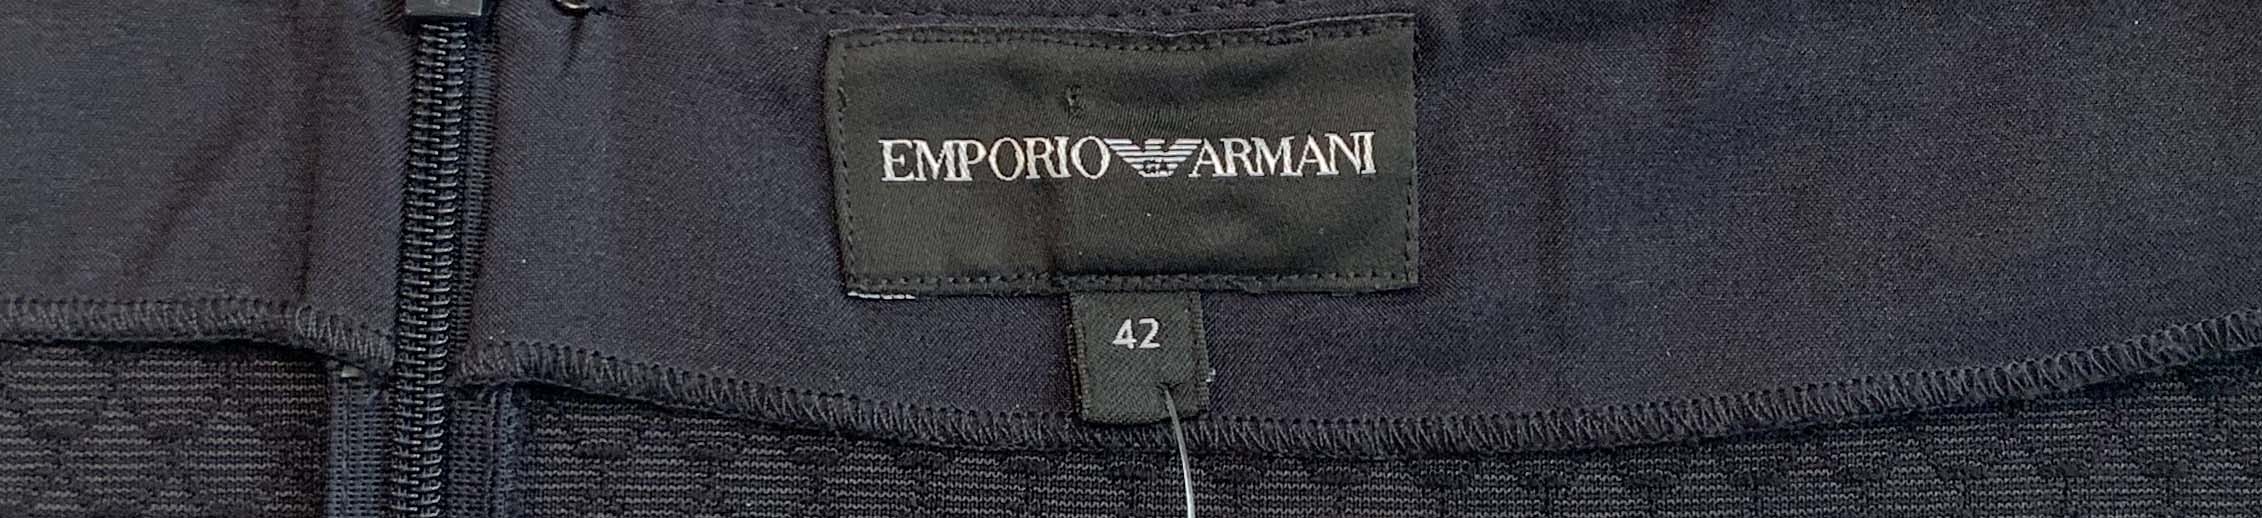 EMPORIO ARMANI skirt 